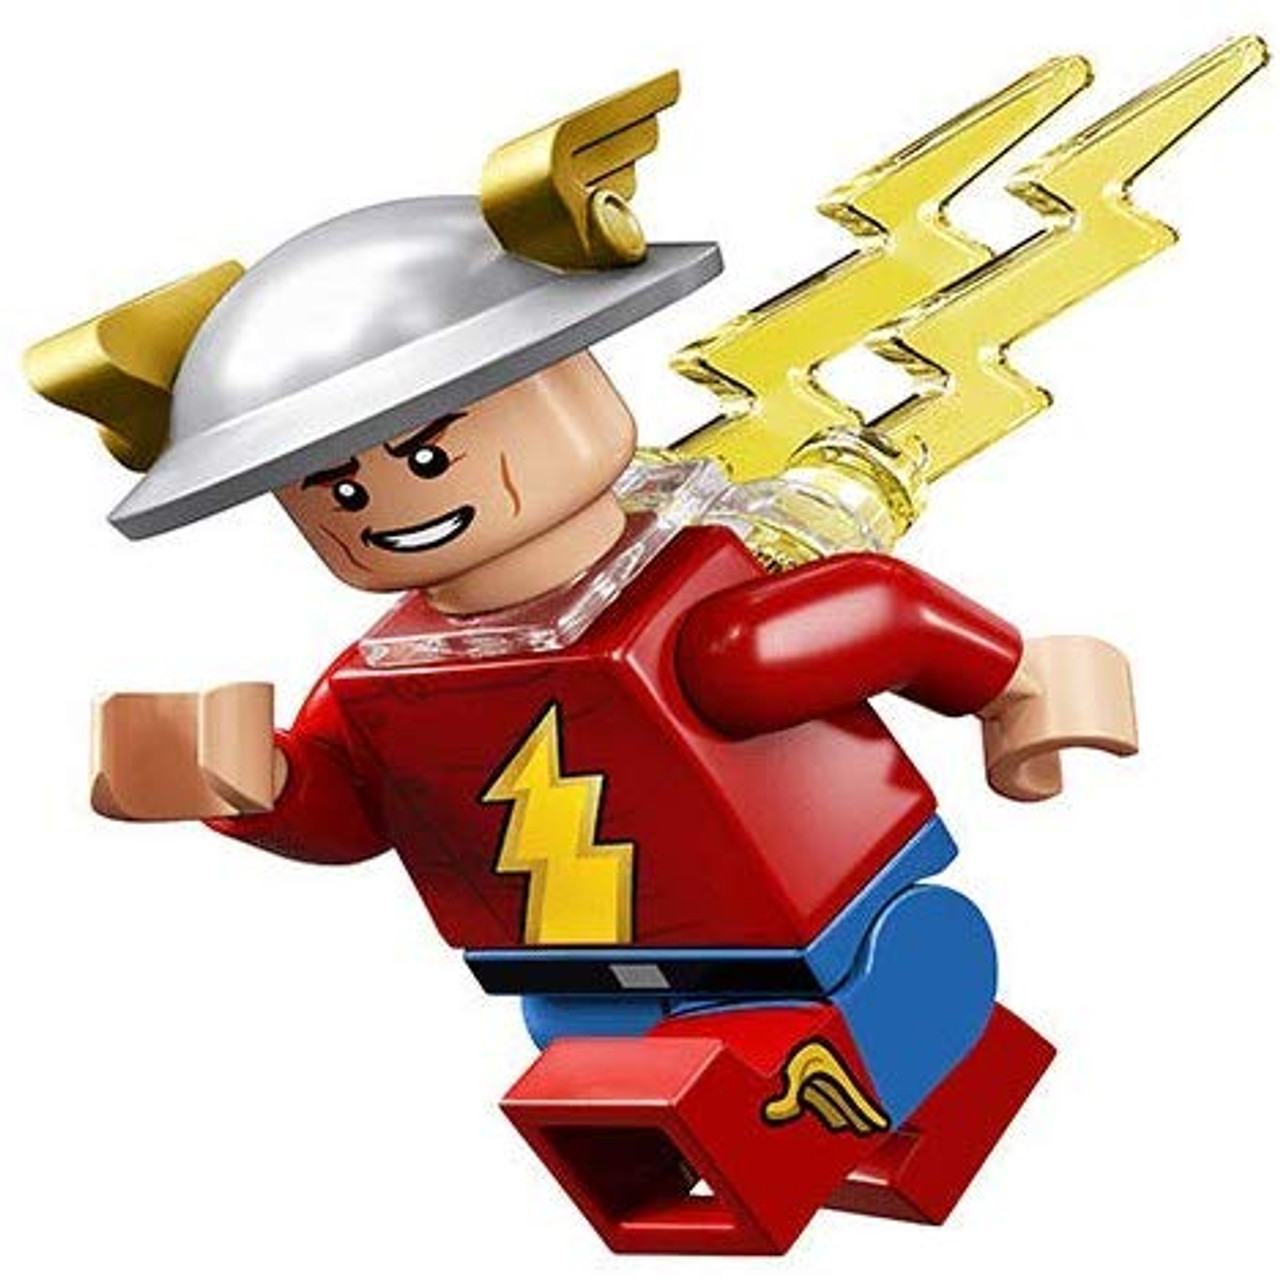 DC Superhero - The Flash - 71026 - The Brick People